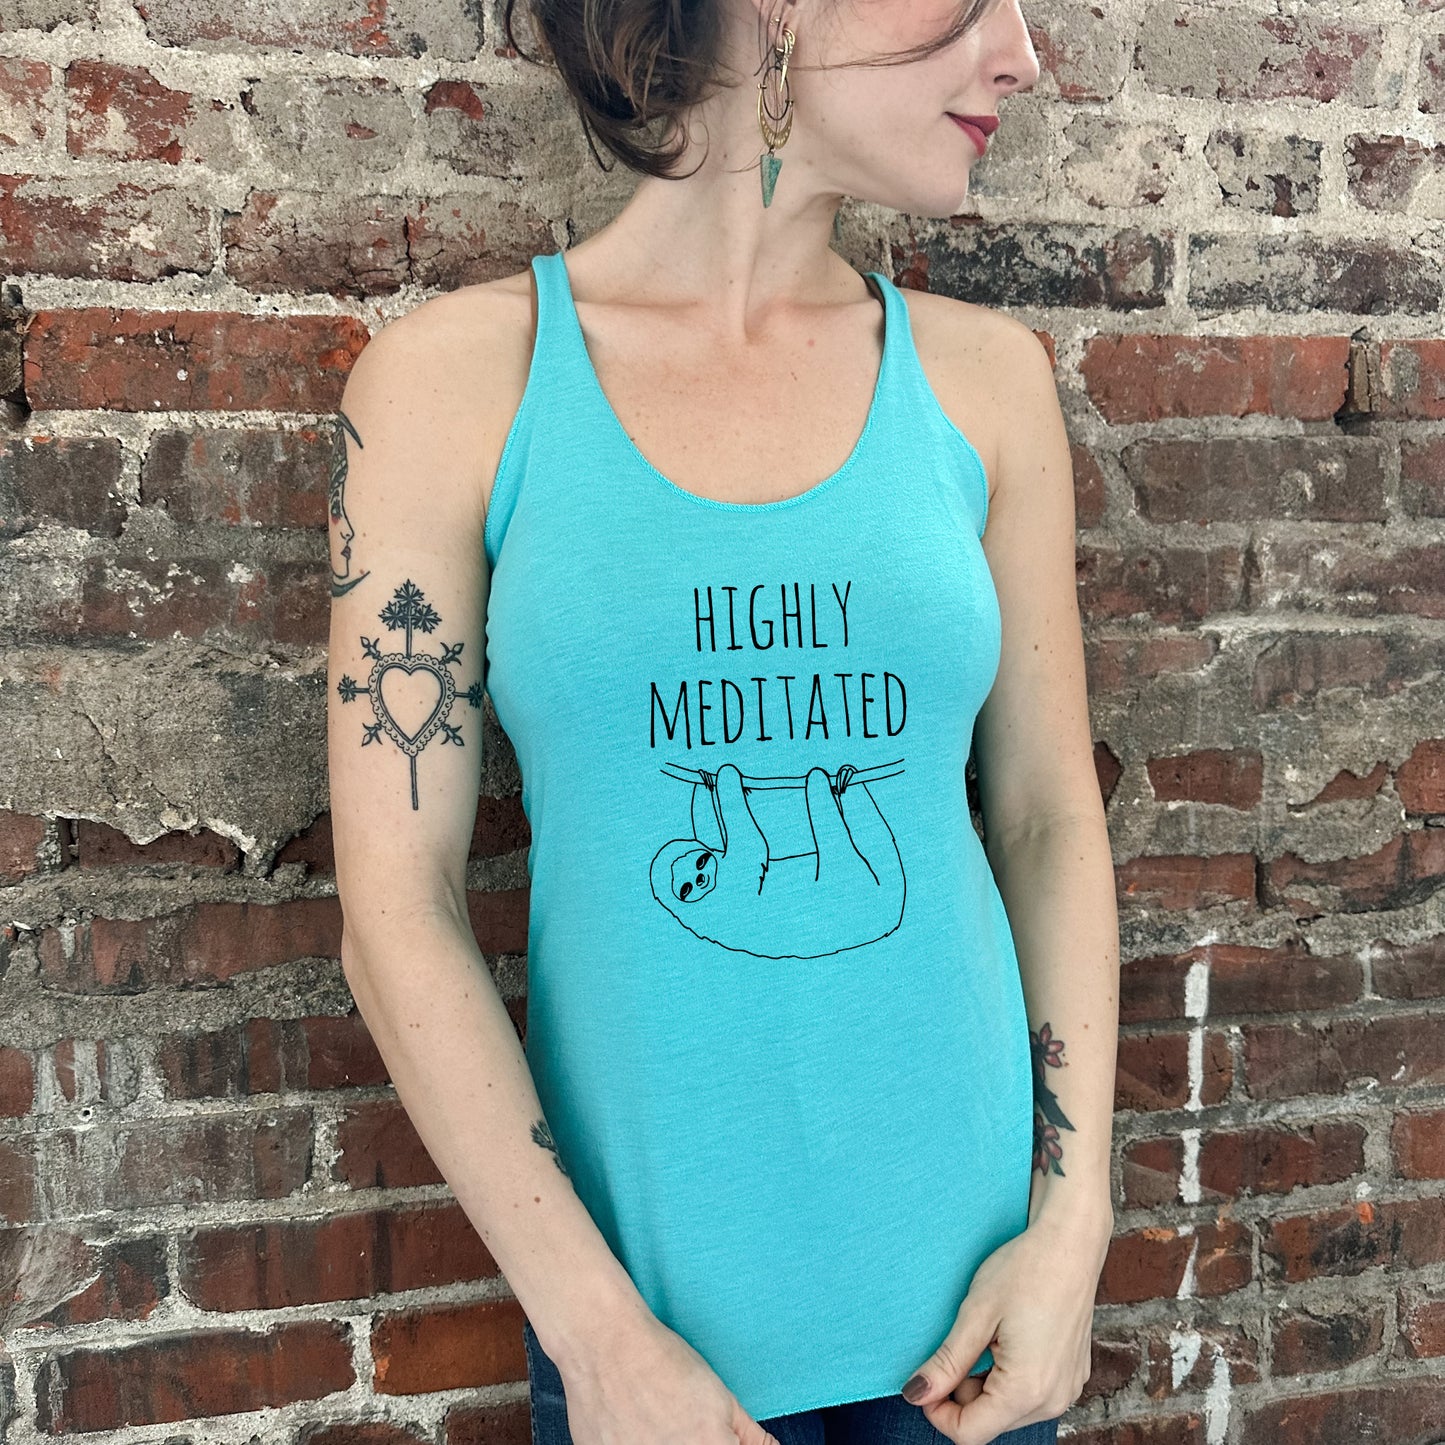 Highly Meditated (Sloth) - Women's Tank - Heather Gray, Tahiti, or Envy